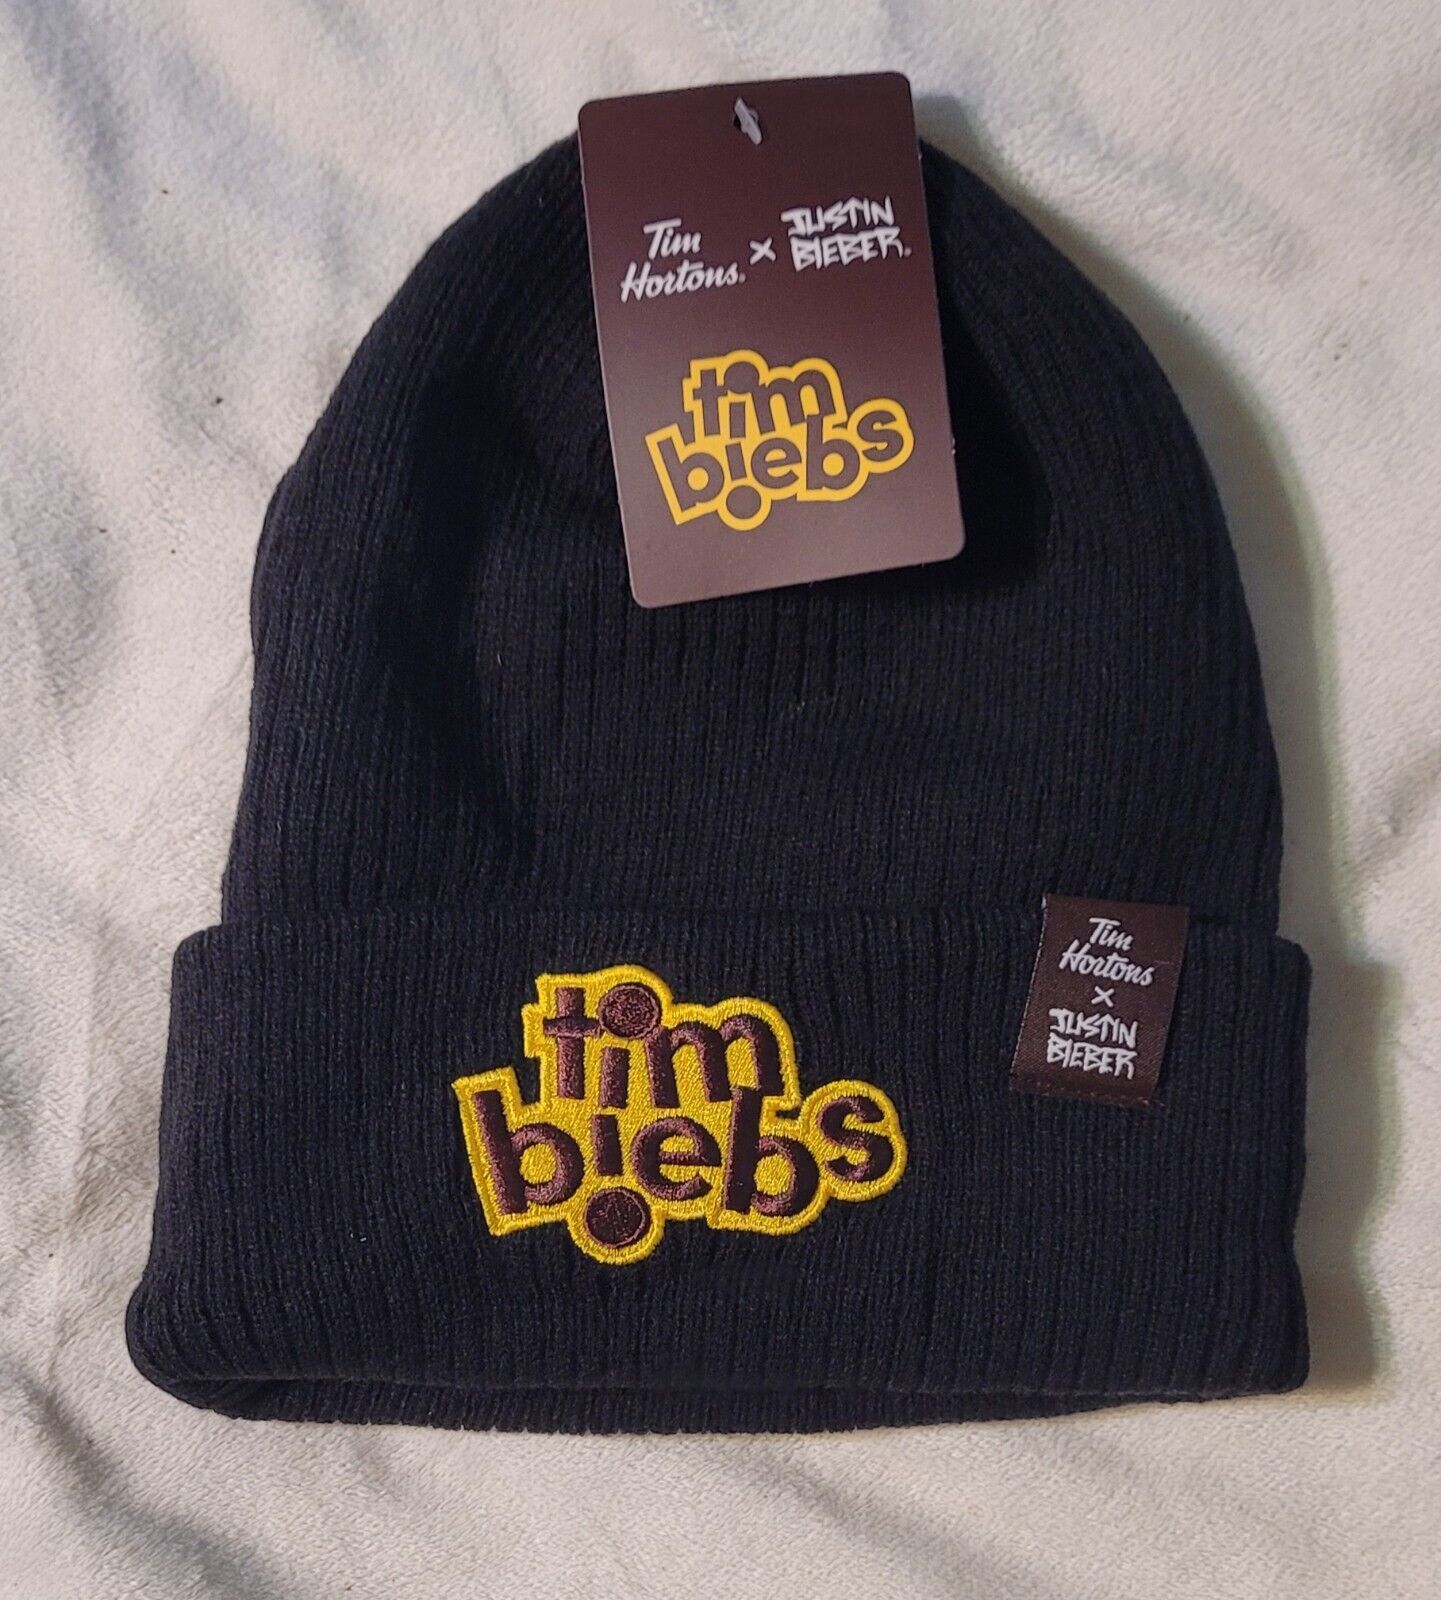 JUSTIN BIEBER x TIM HORTONS Tim Biebs Black Toque Beanie Winter Hat Limited Edit